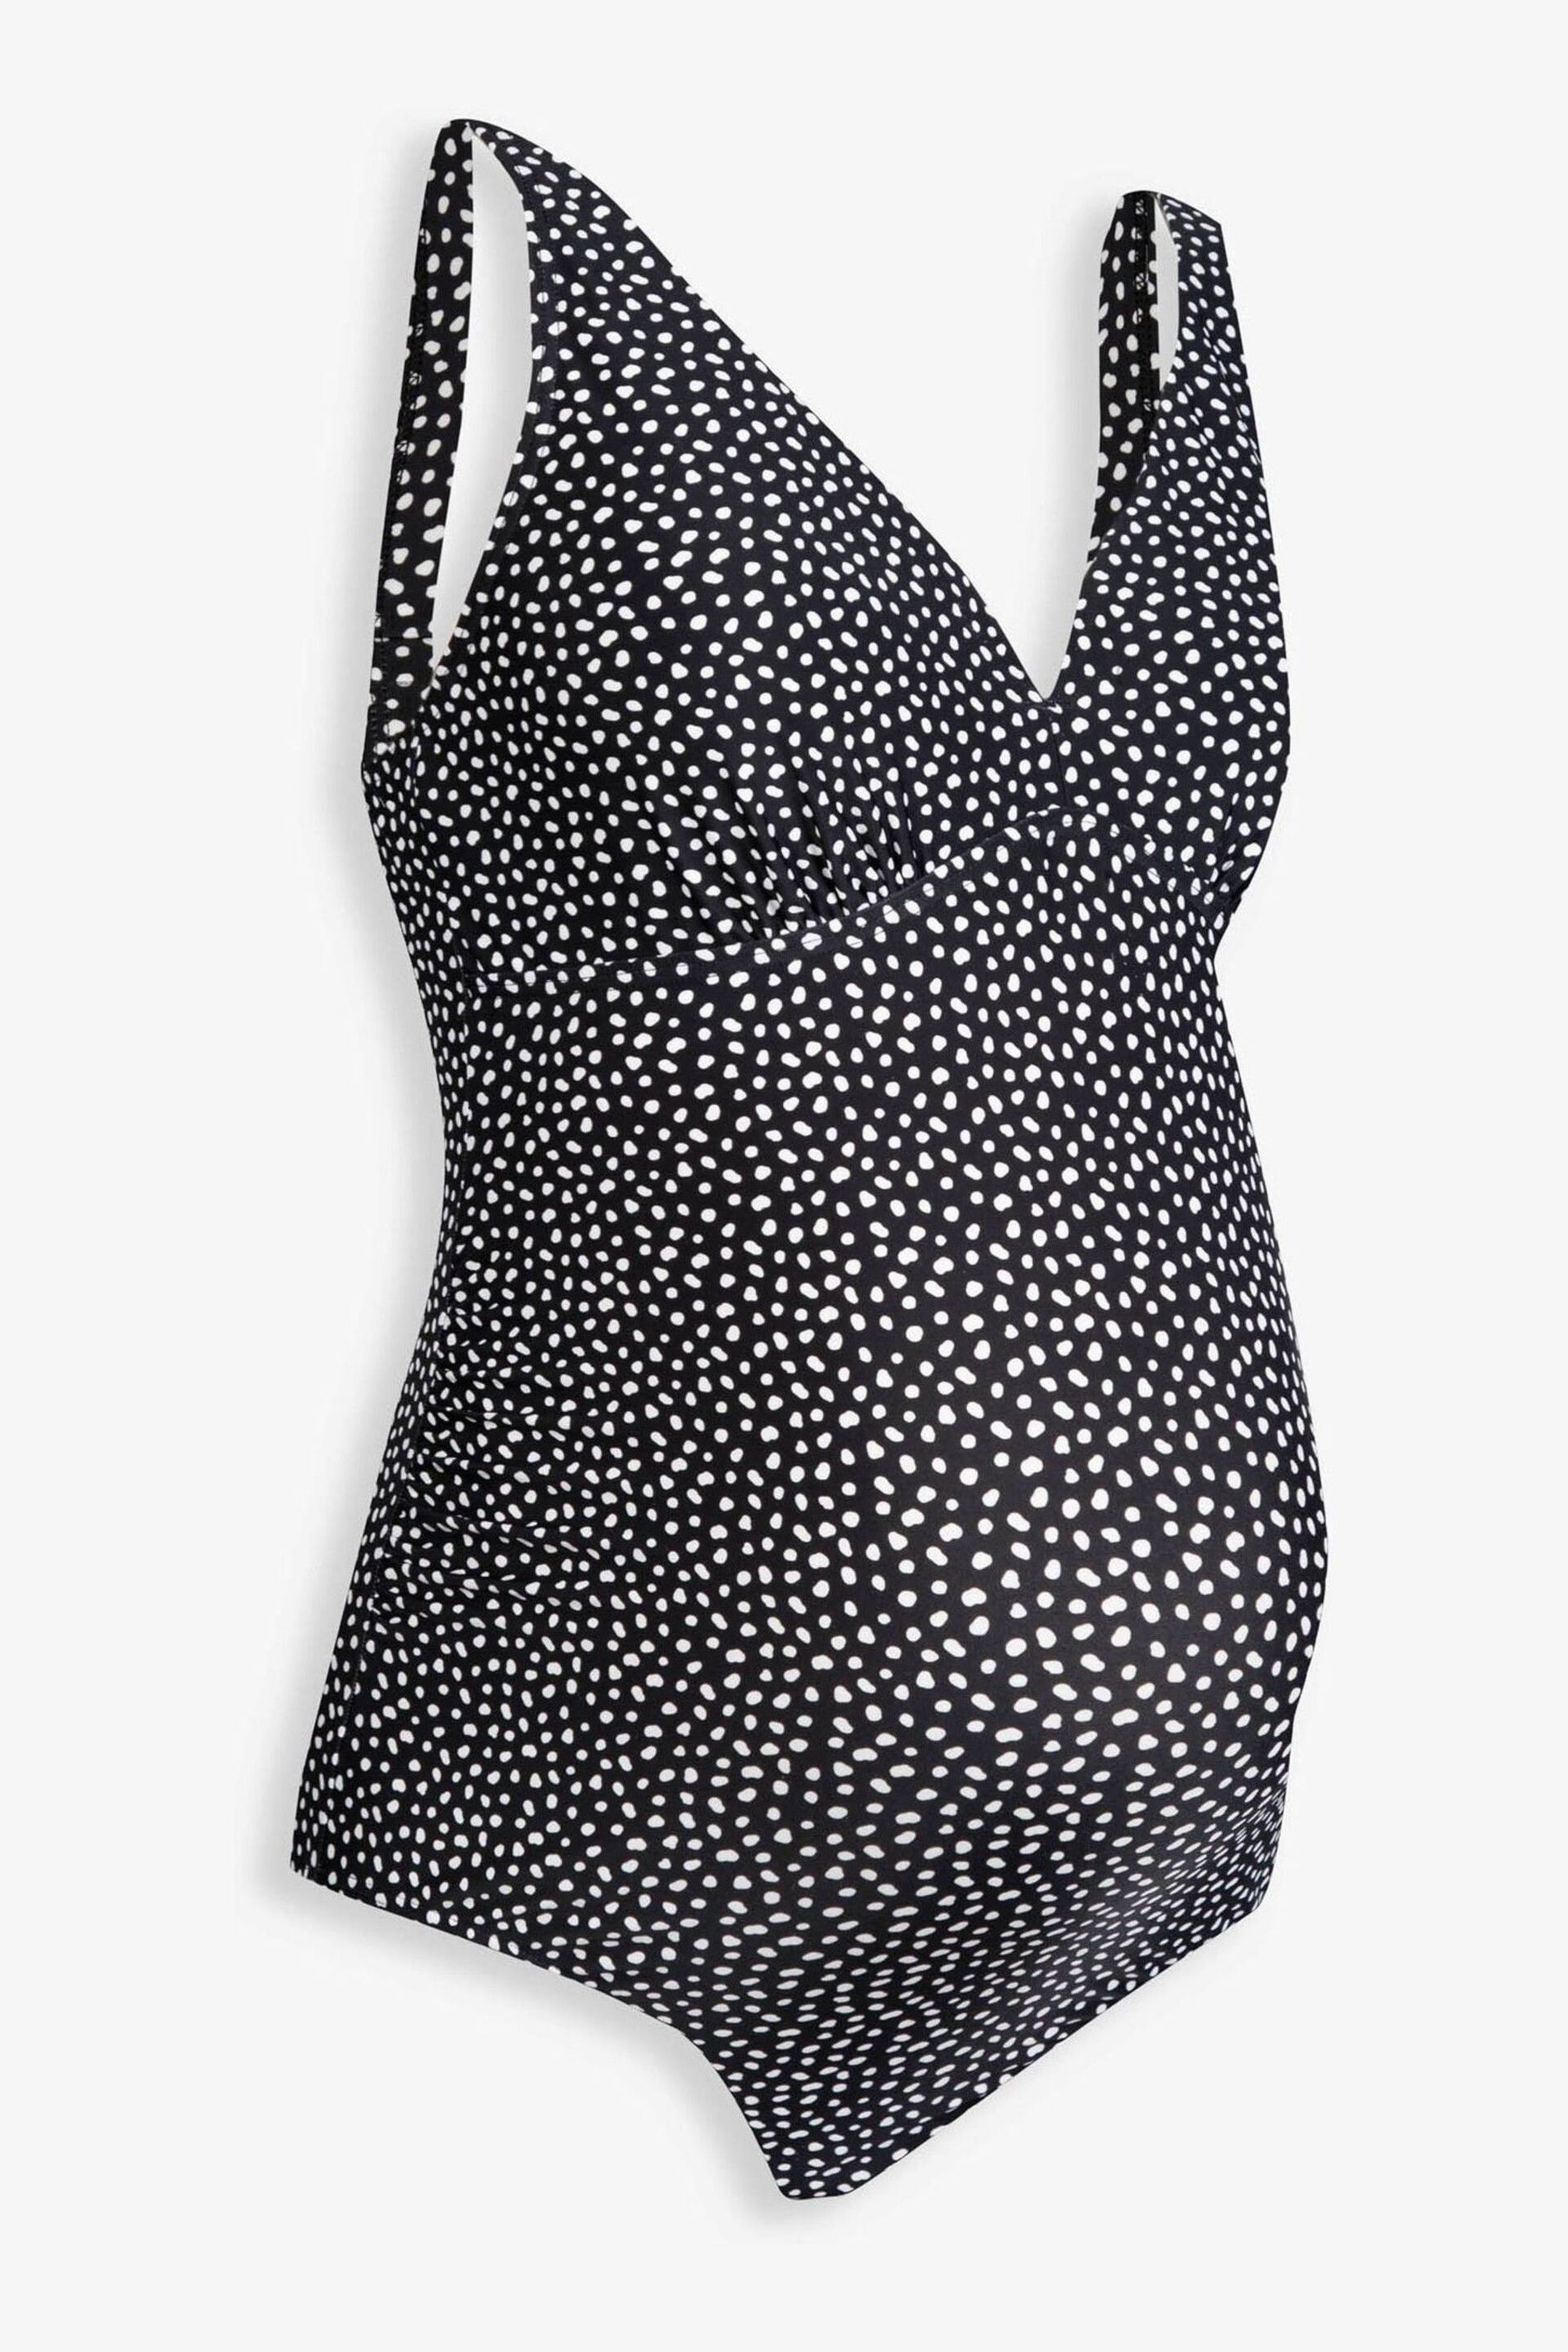 JoJo Maman Bébé Black & White Spot V-Neck Maternity Swimsuit - Image 6 of 6